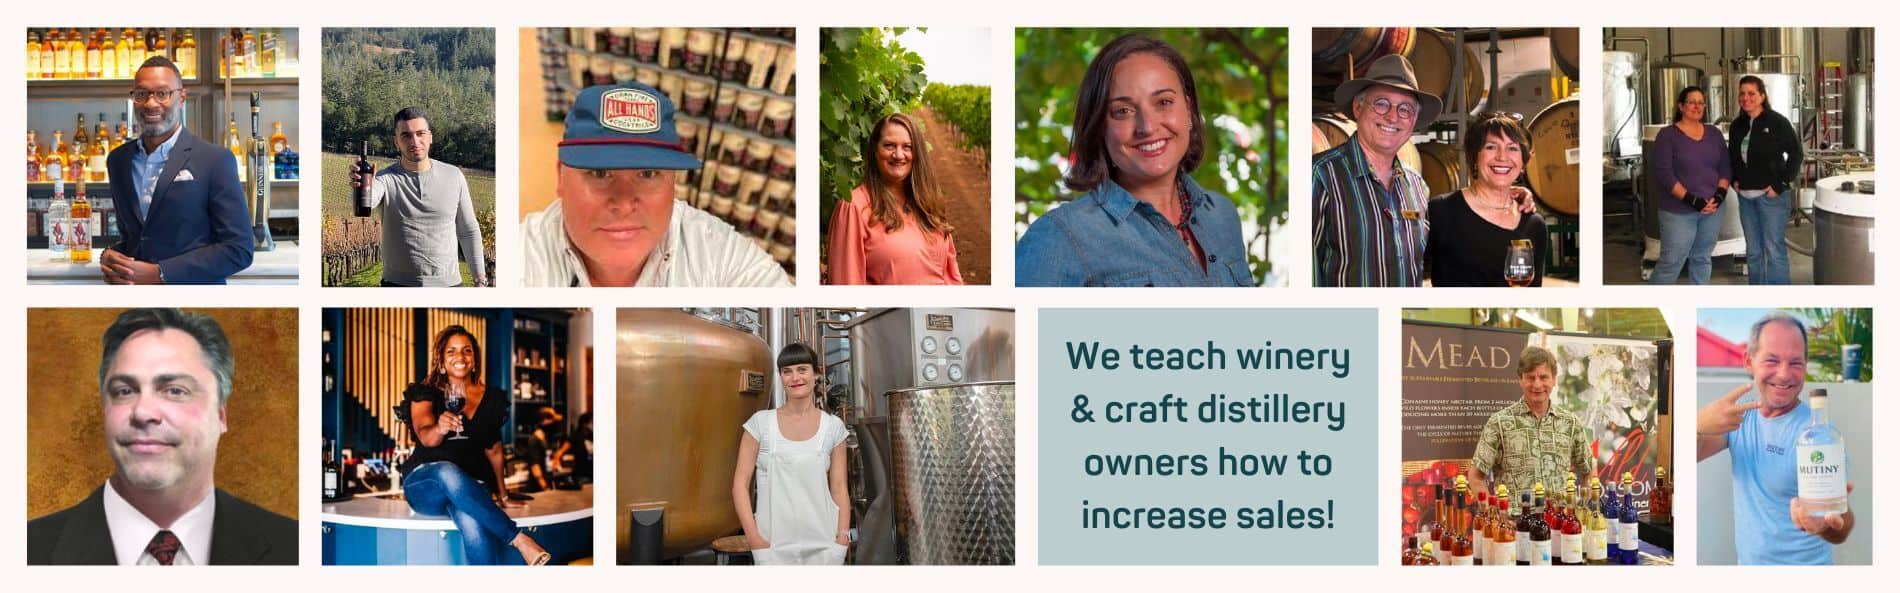 Wine Sales Stimulator Group Membership Program - We teach winery and distillery owners how to increase sales